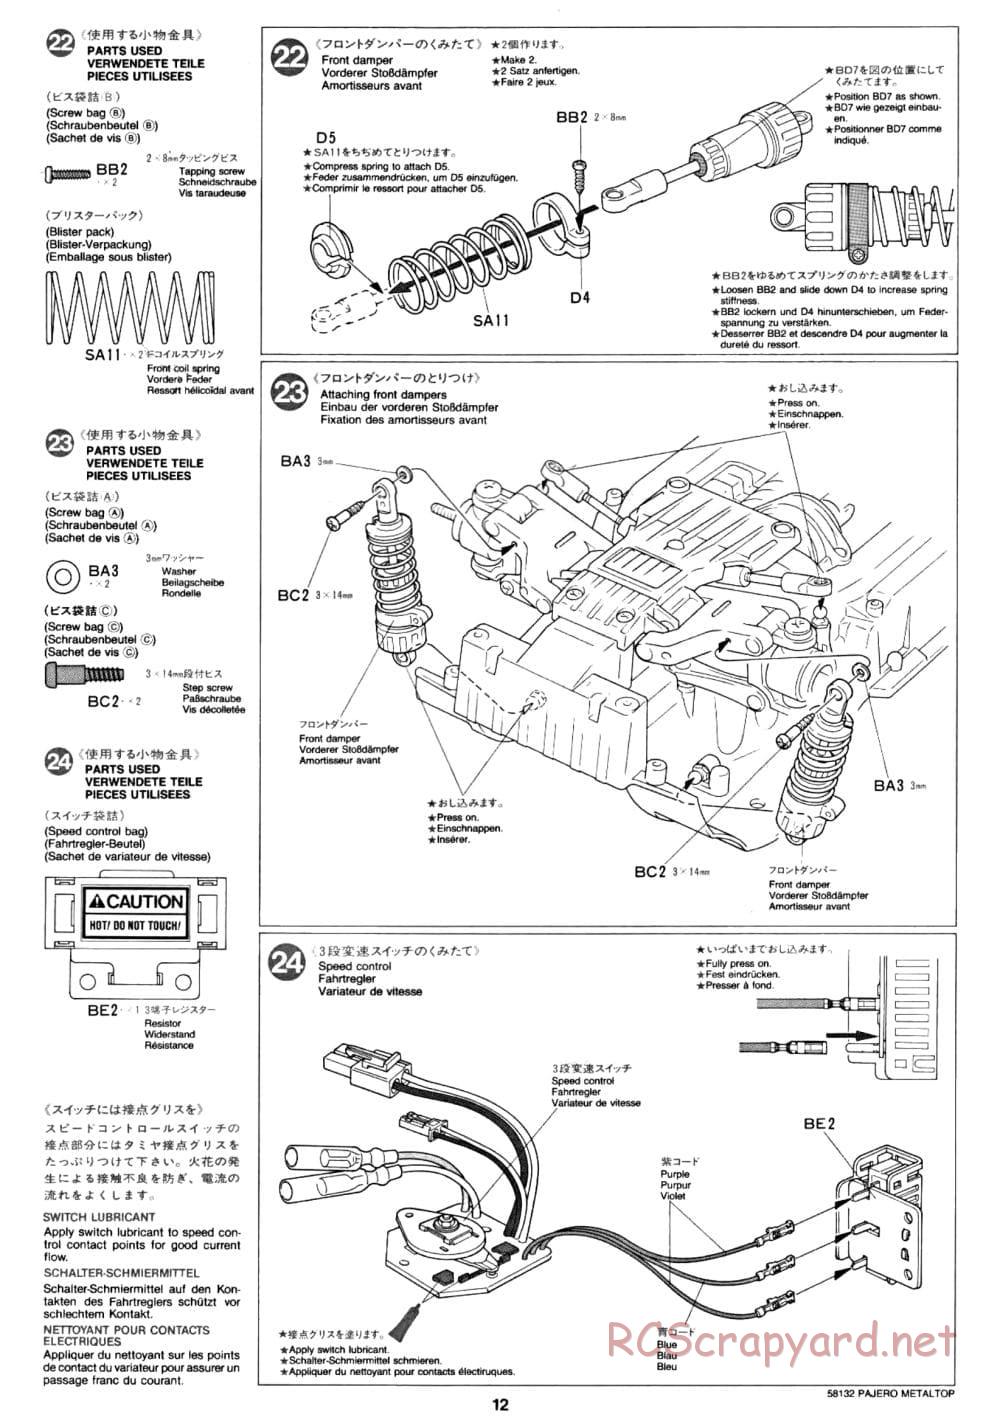 Tamiya - Mitsubishi Pajero Metaltop Wide - CC-01 Chassis - Manual - Page 12